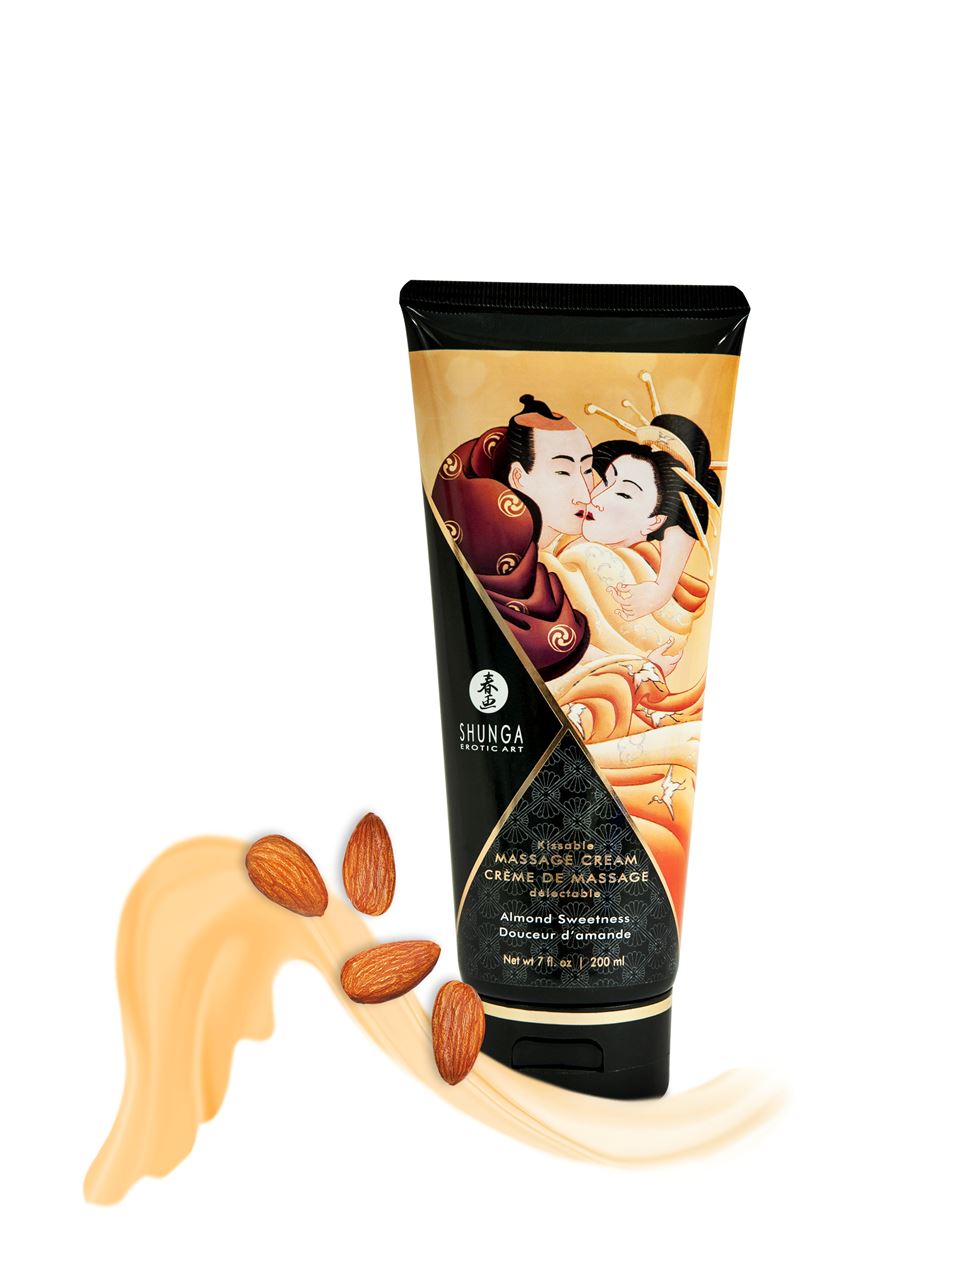 Shunga Kissable Massage Creams 200ml/7fl.oz - Almond Sweetness